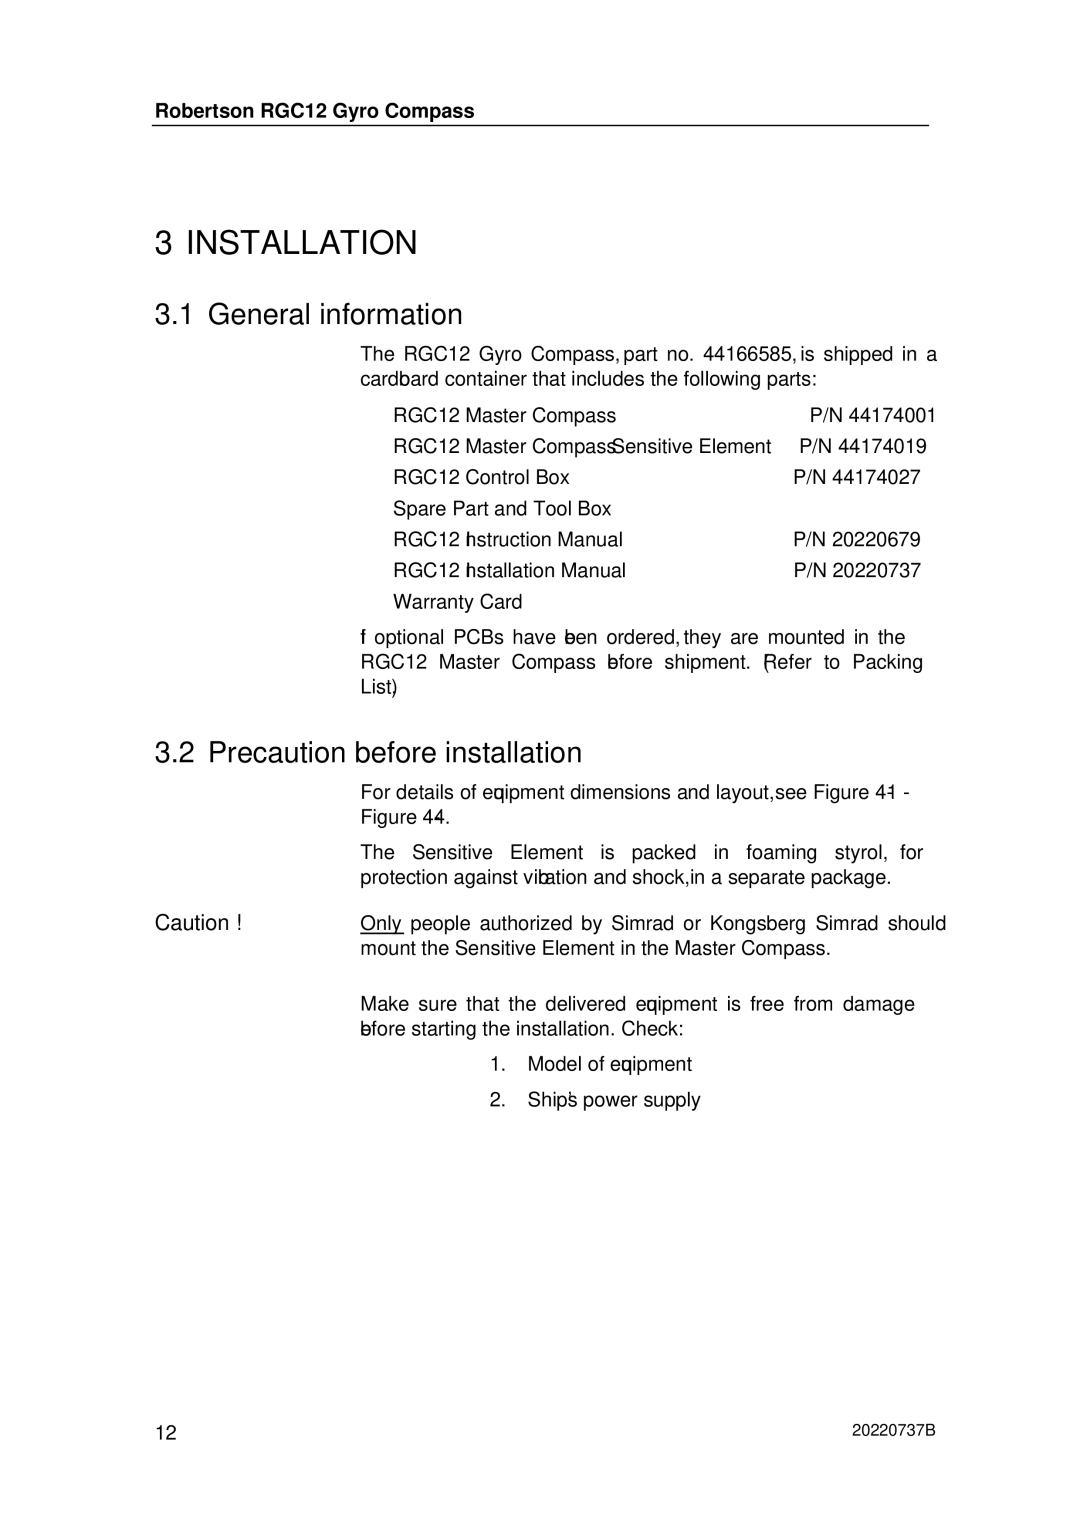 Simrad RGC12 manual General information, Precaution before installation 